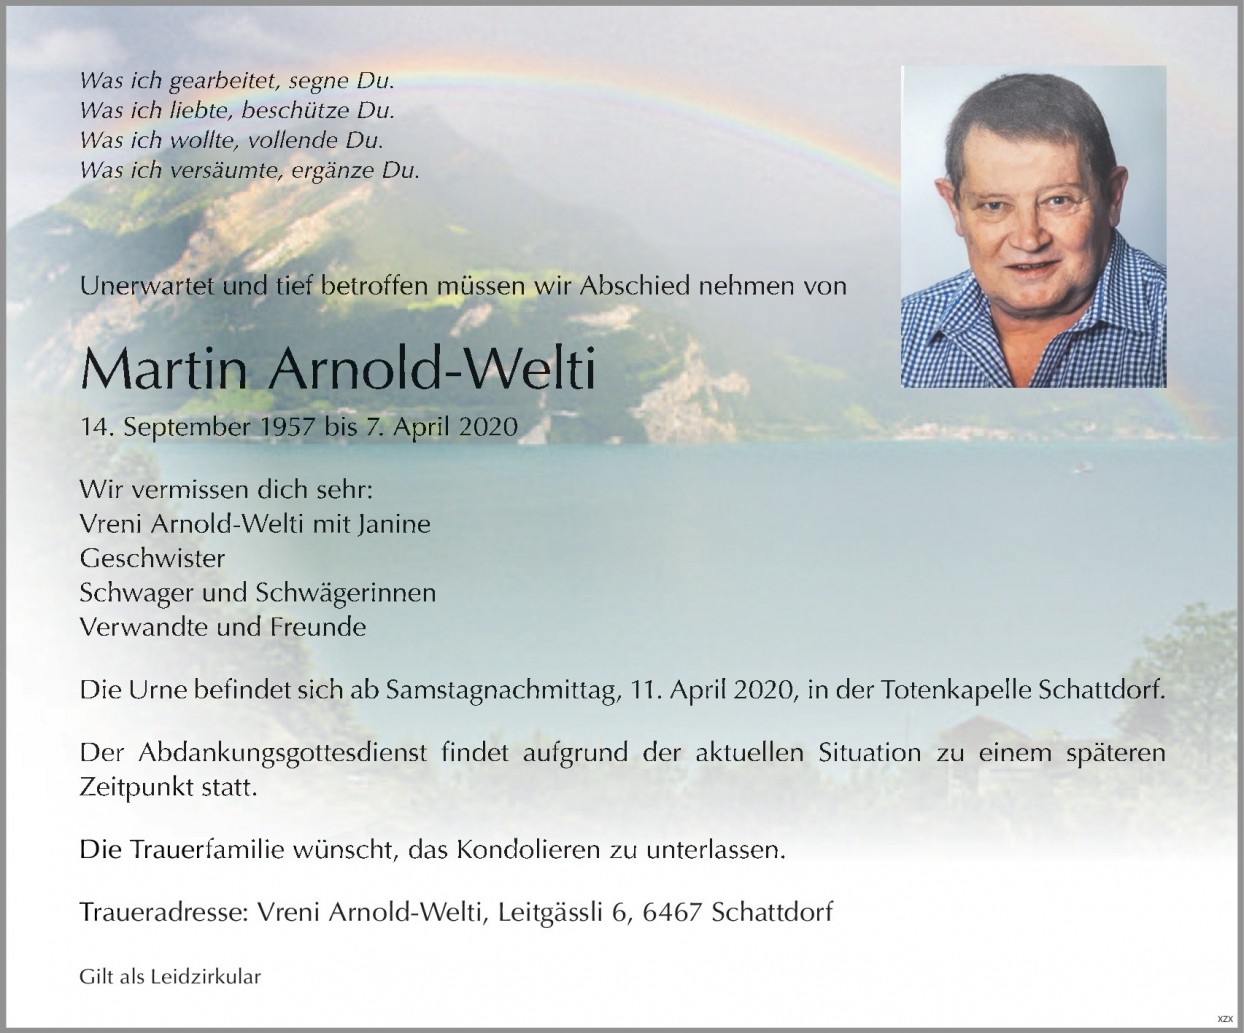 Martin Arnold-Welti